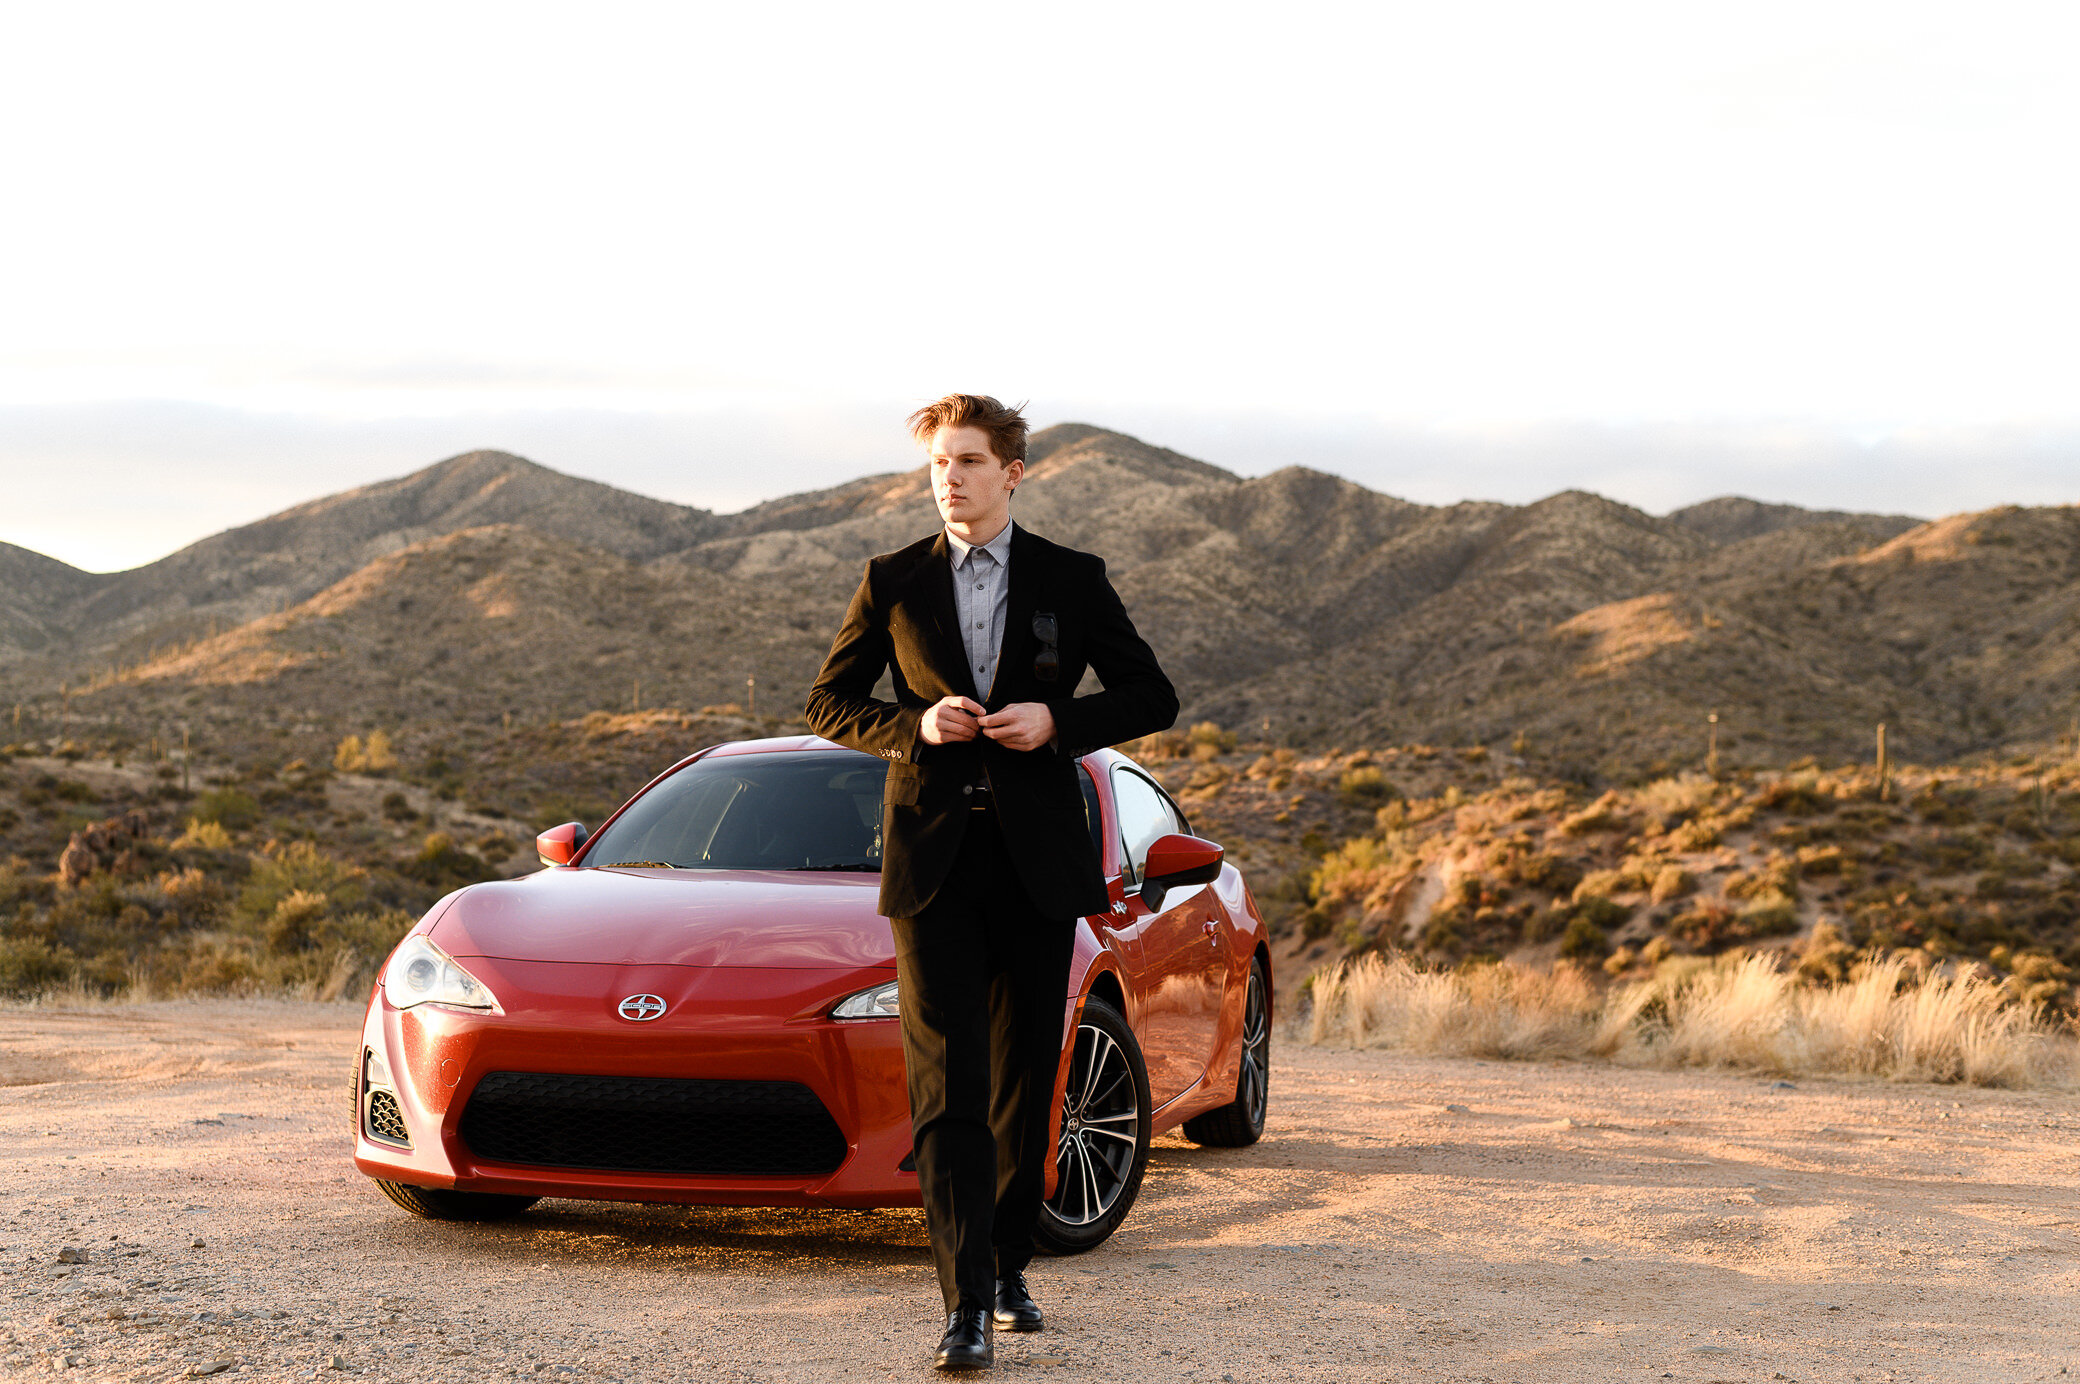 Red Sports Car Scion Frs Red Sports Car James Bond Inspired Photoshoot Miranda Kelton Photography